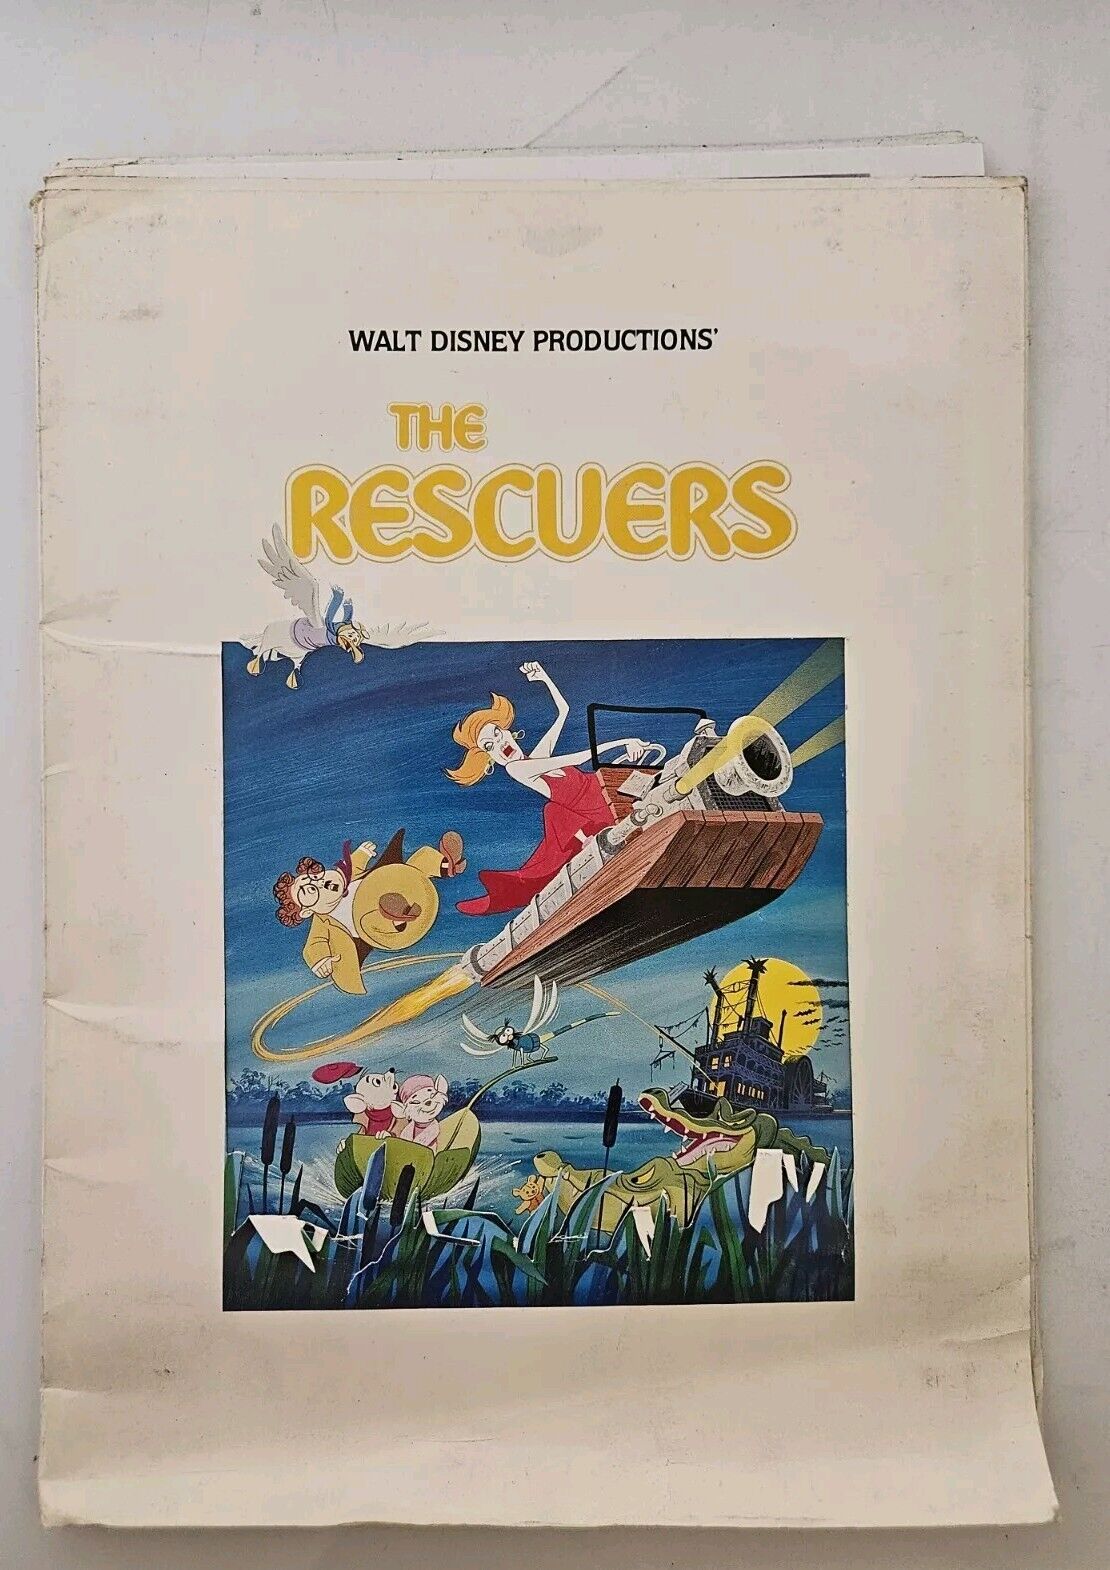 Disney's The Rescuers 1978 Press Kit with press photos